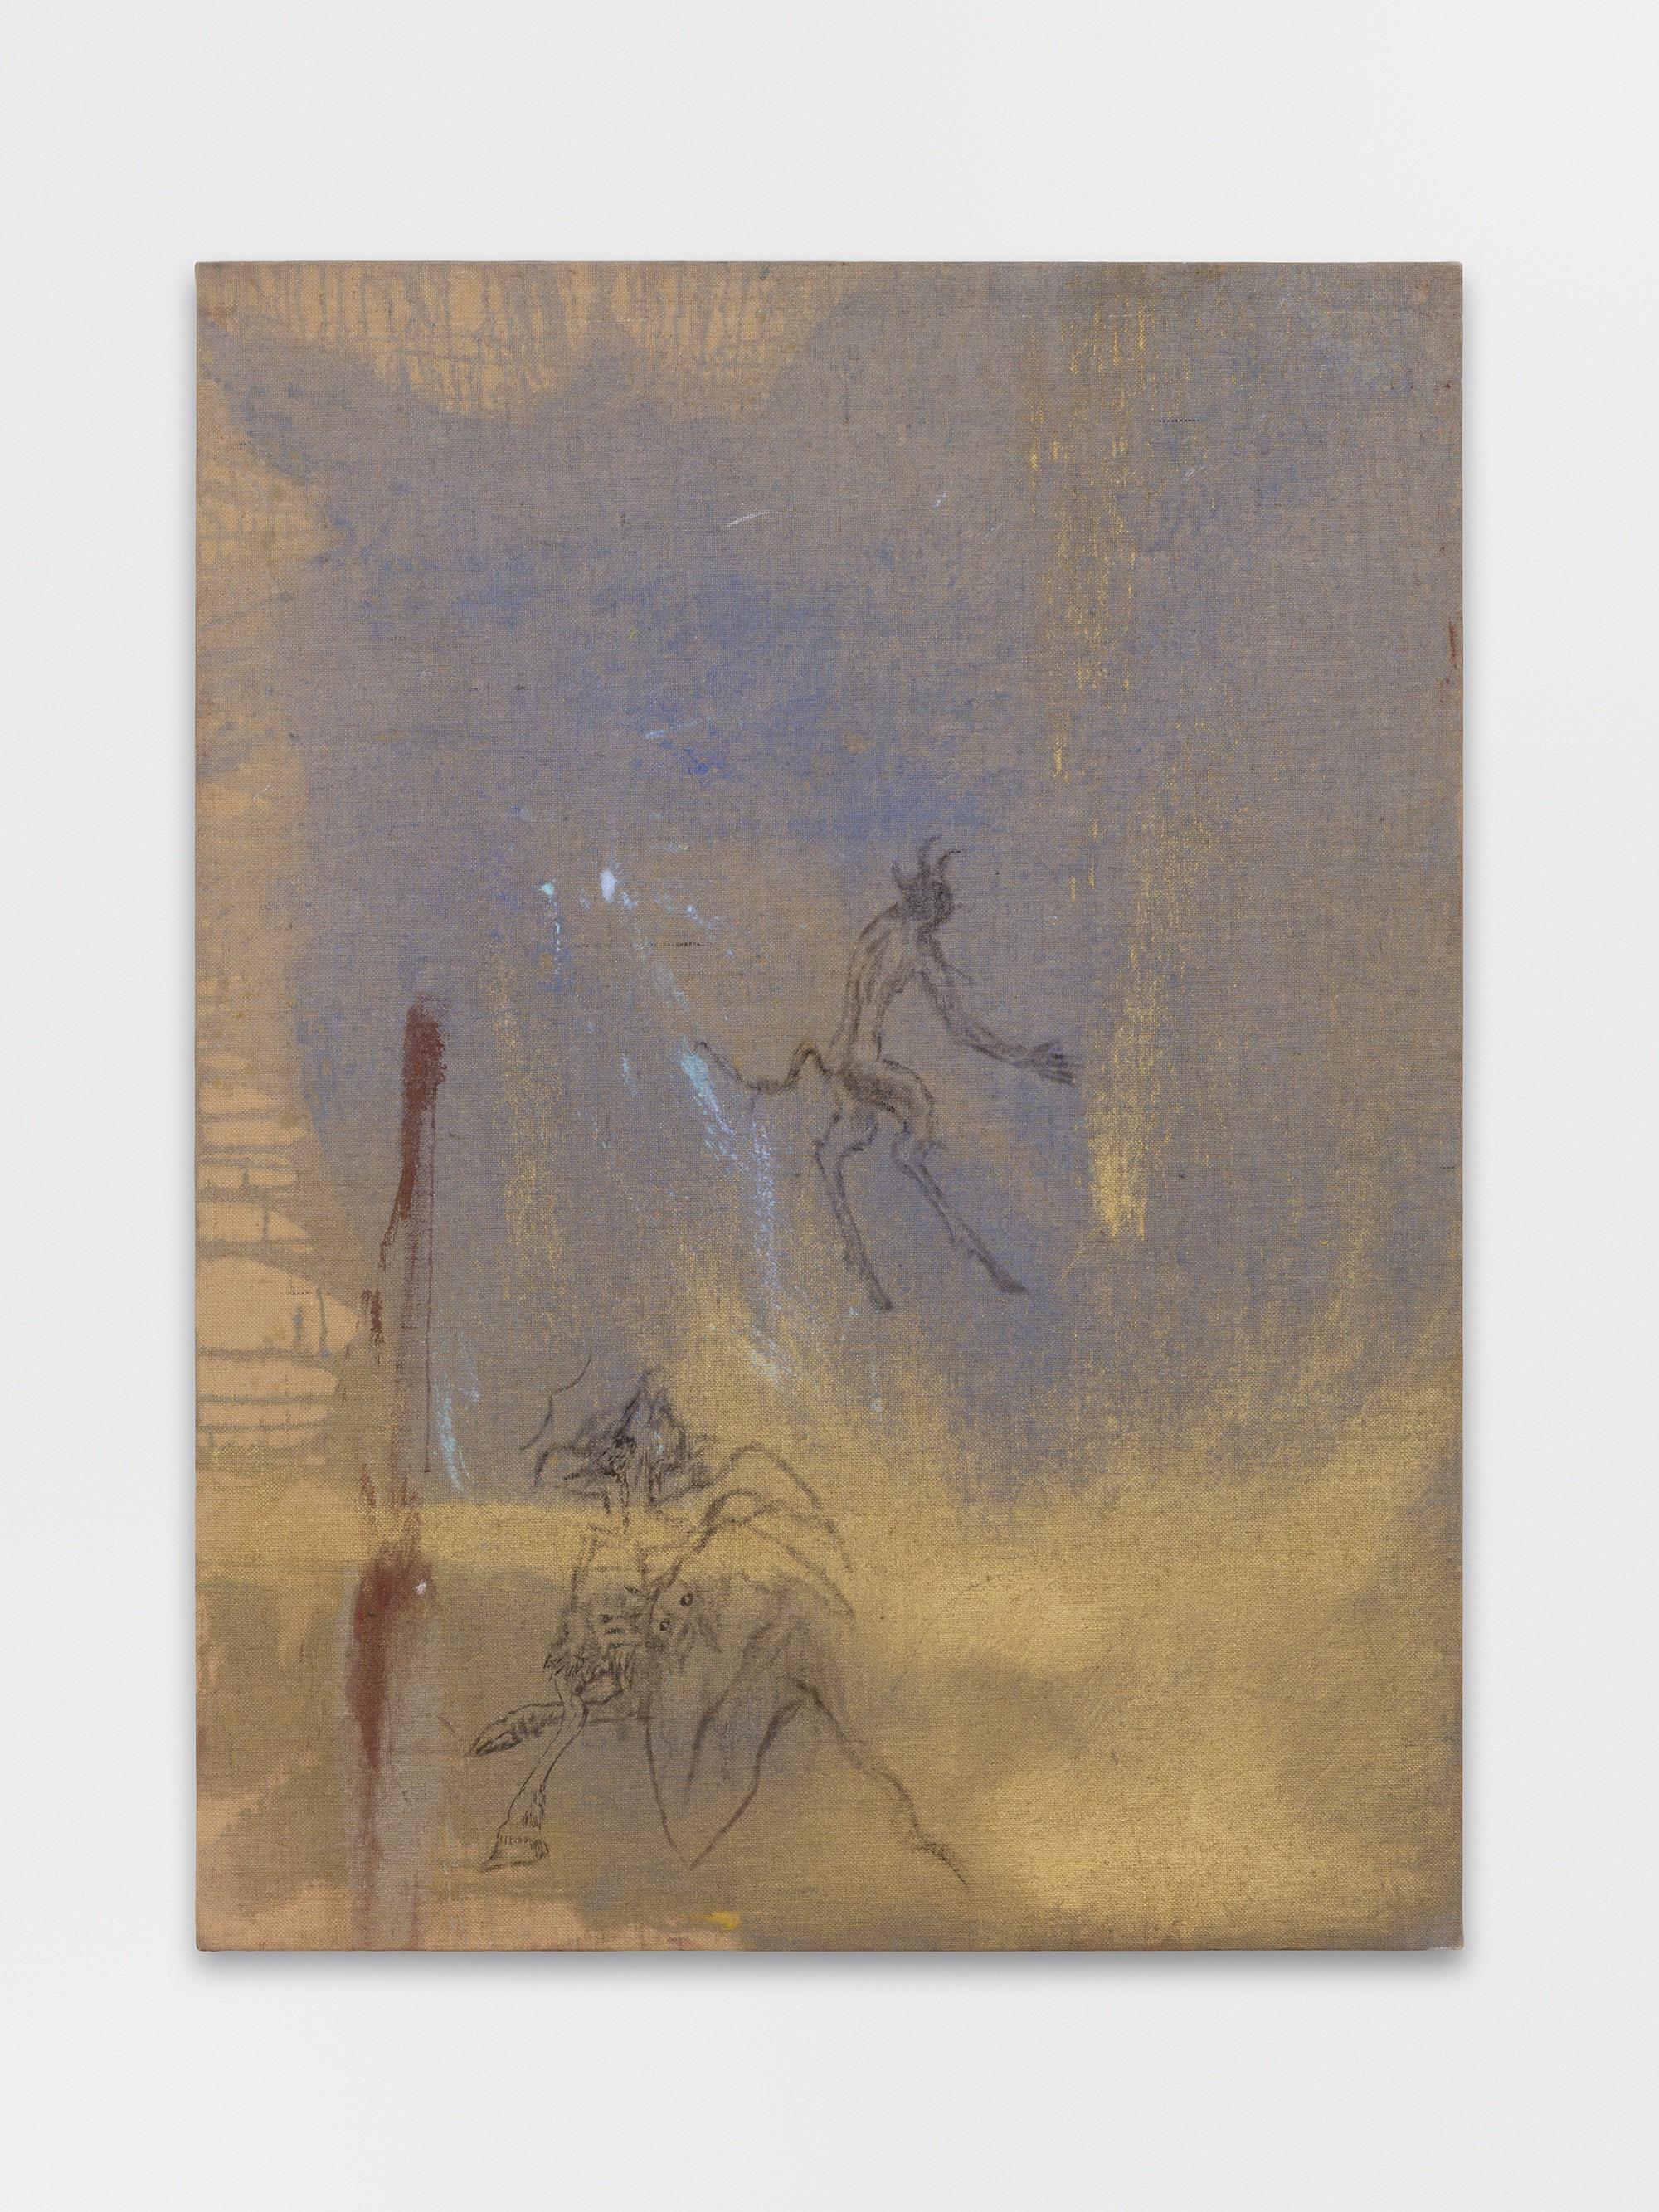 Leonardo PellicanÃ², "There is no one," 2019 Acrylic, oil and brass dust on raw jute  140 x 105 cm